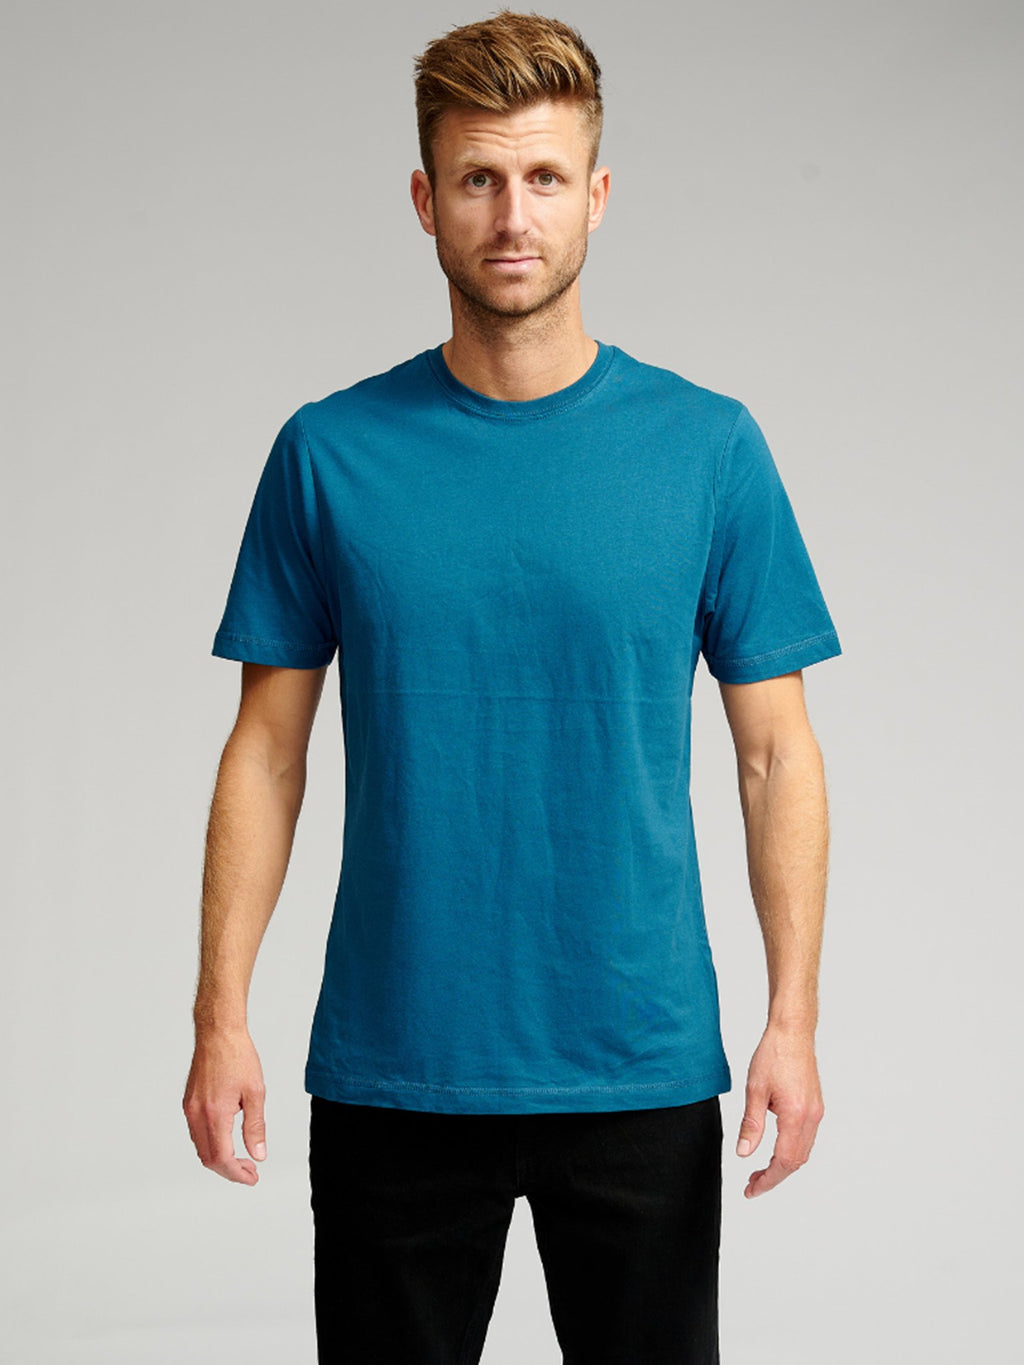 Bio Basic T-Shirts - Offre groupée (9 pcs.) (FB)